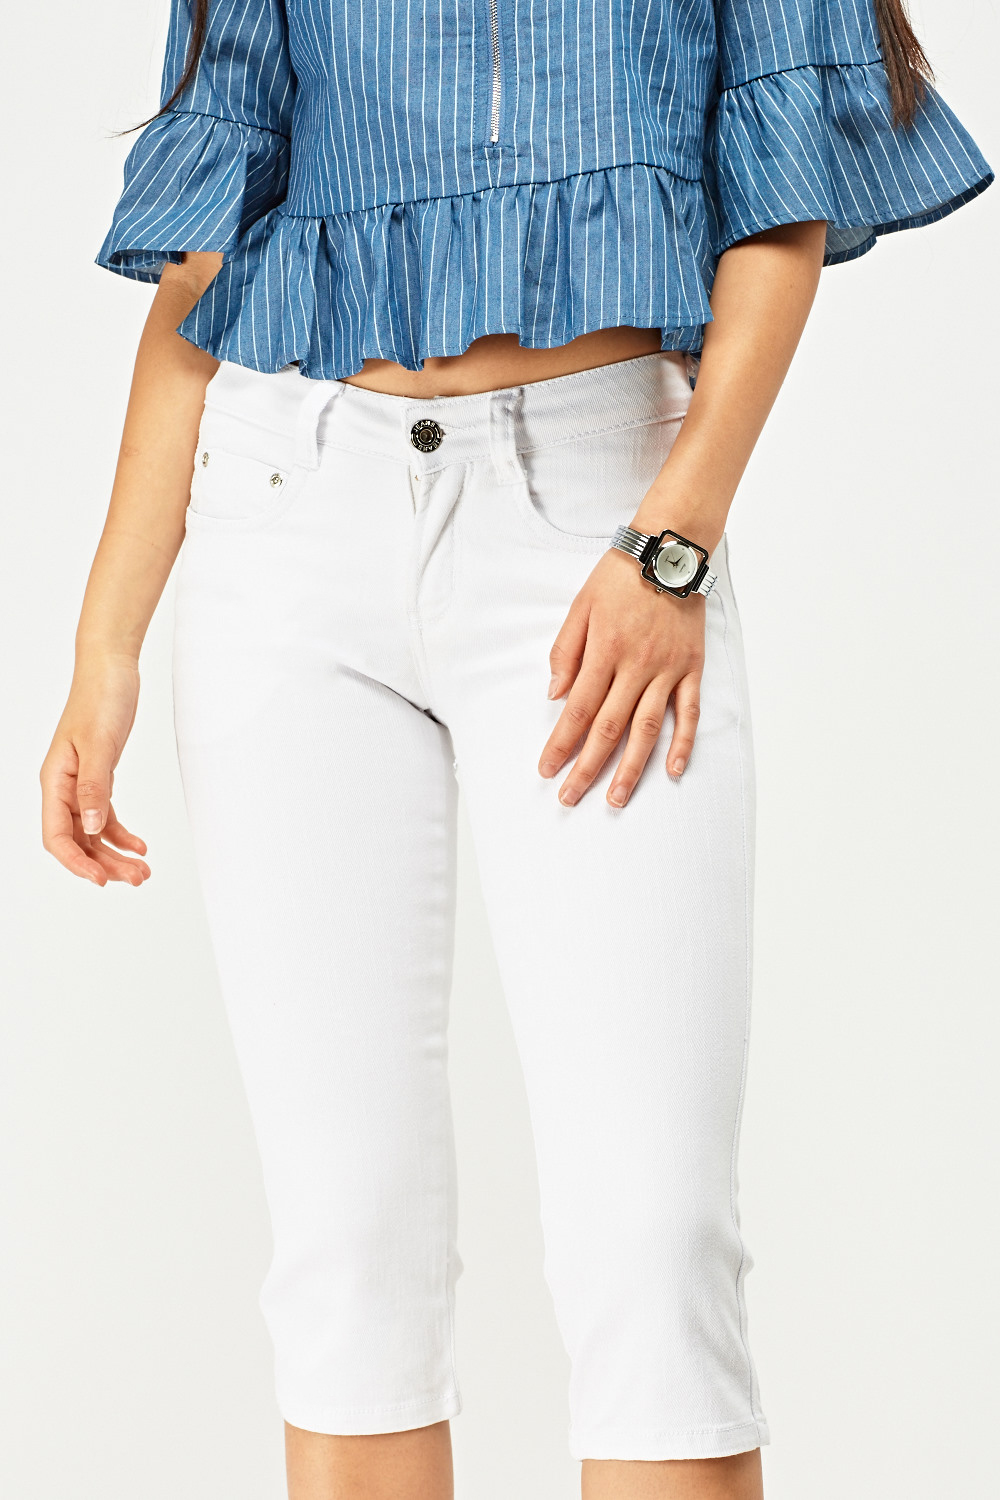 Capri Low Waist Jeans - Just $2